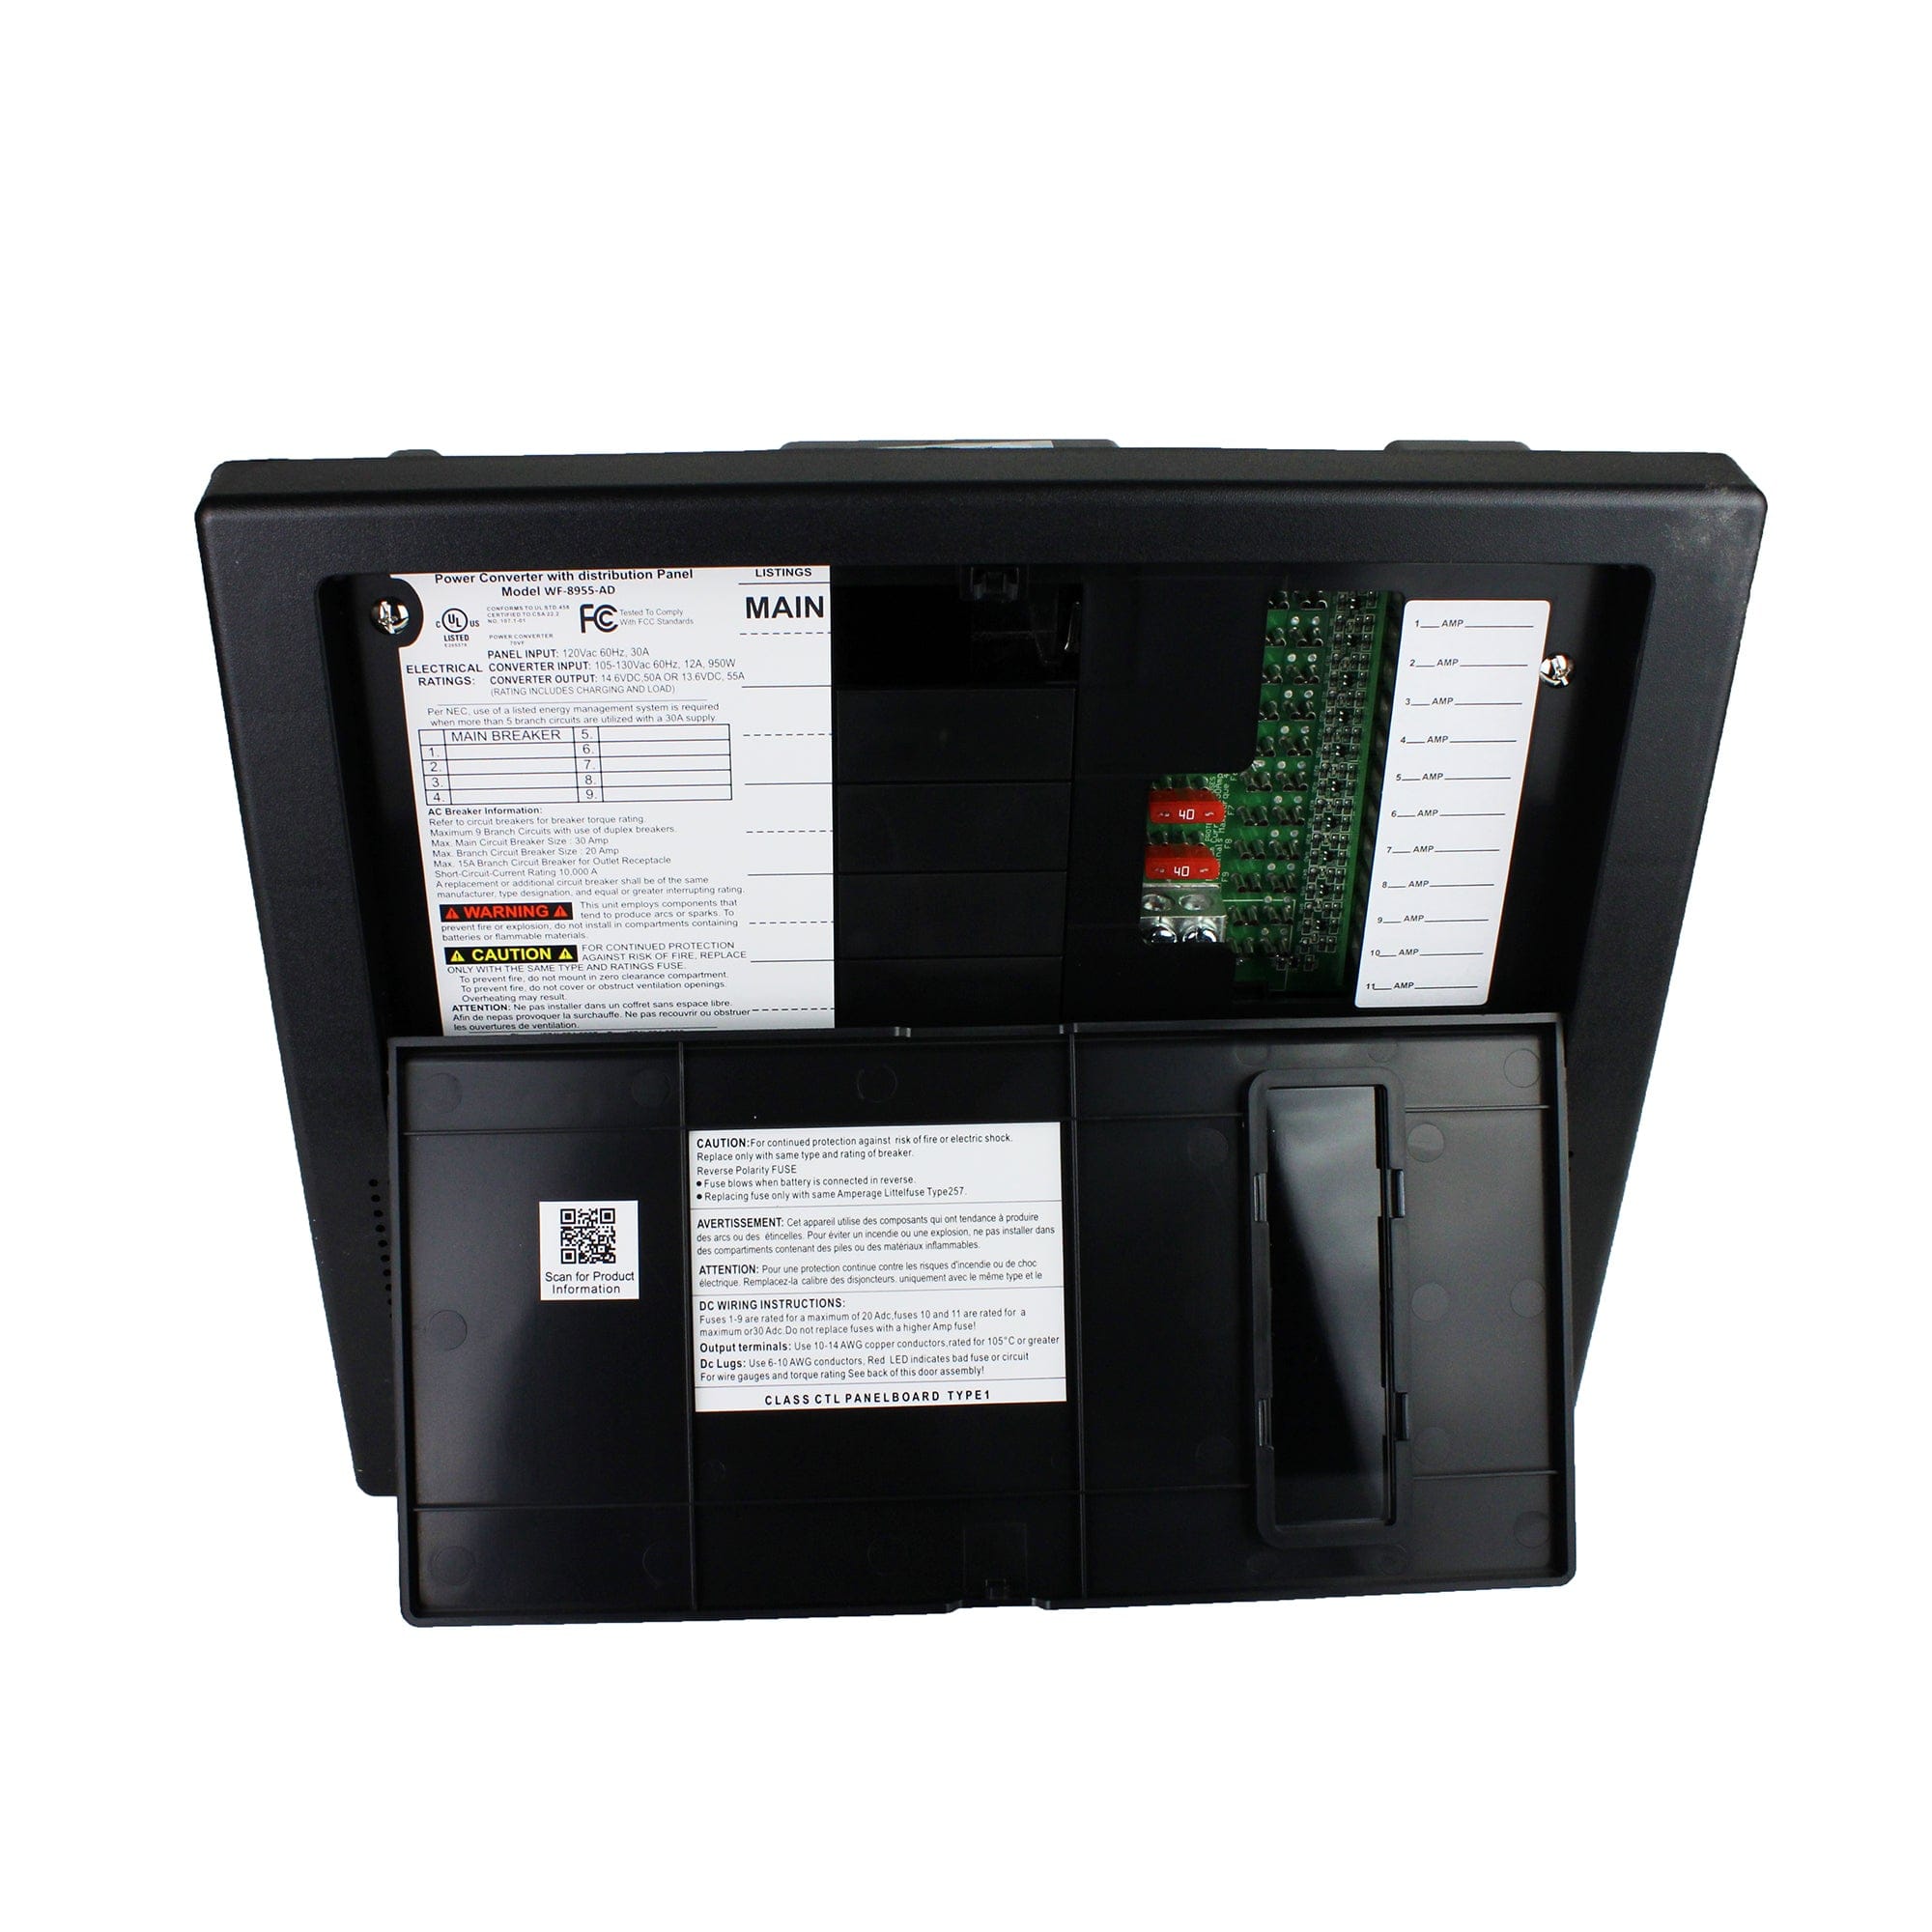 WFCO WF-8955-AD Auto Detect Converter Charger Distribution Center 11 Circuits, Black